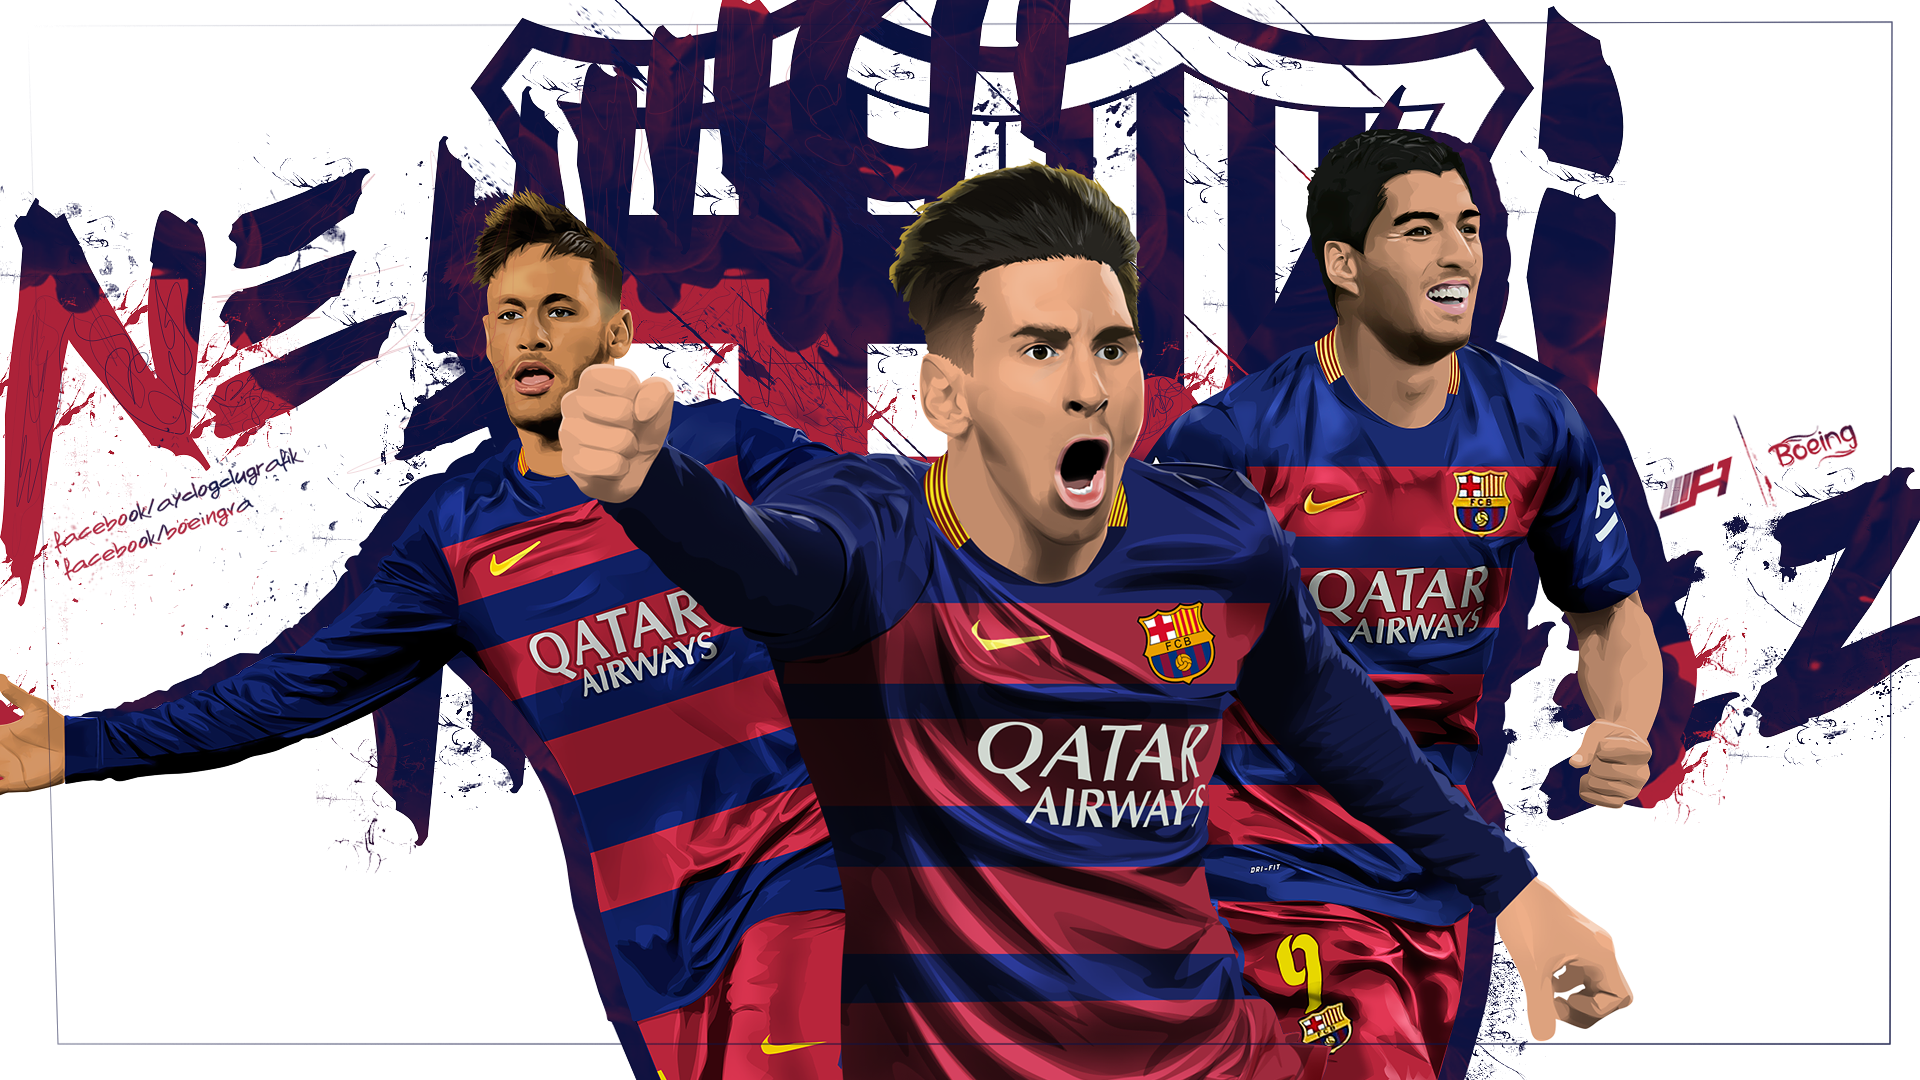 Neymar Messi Suarez Poster images